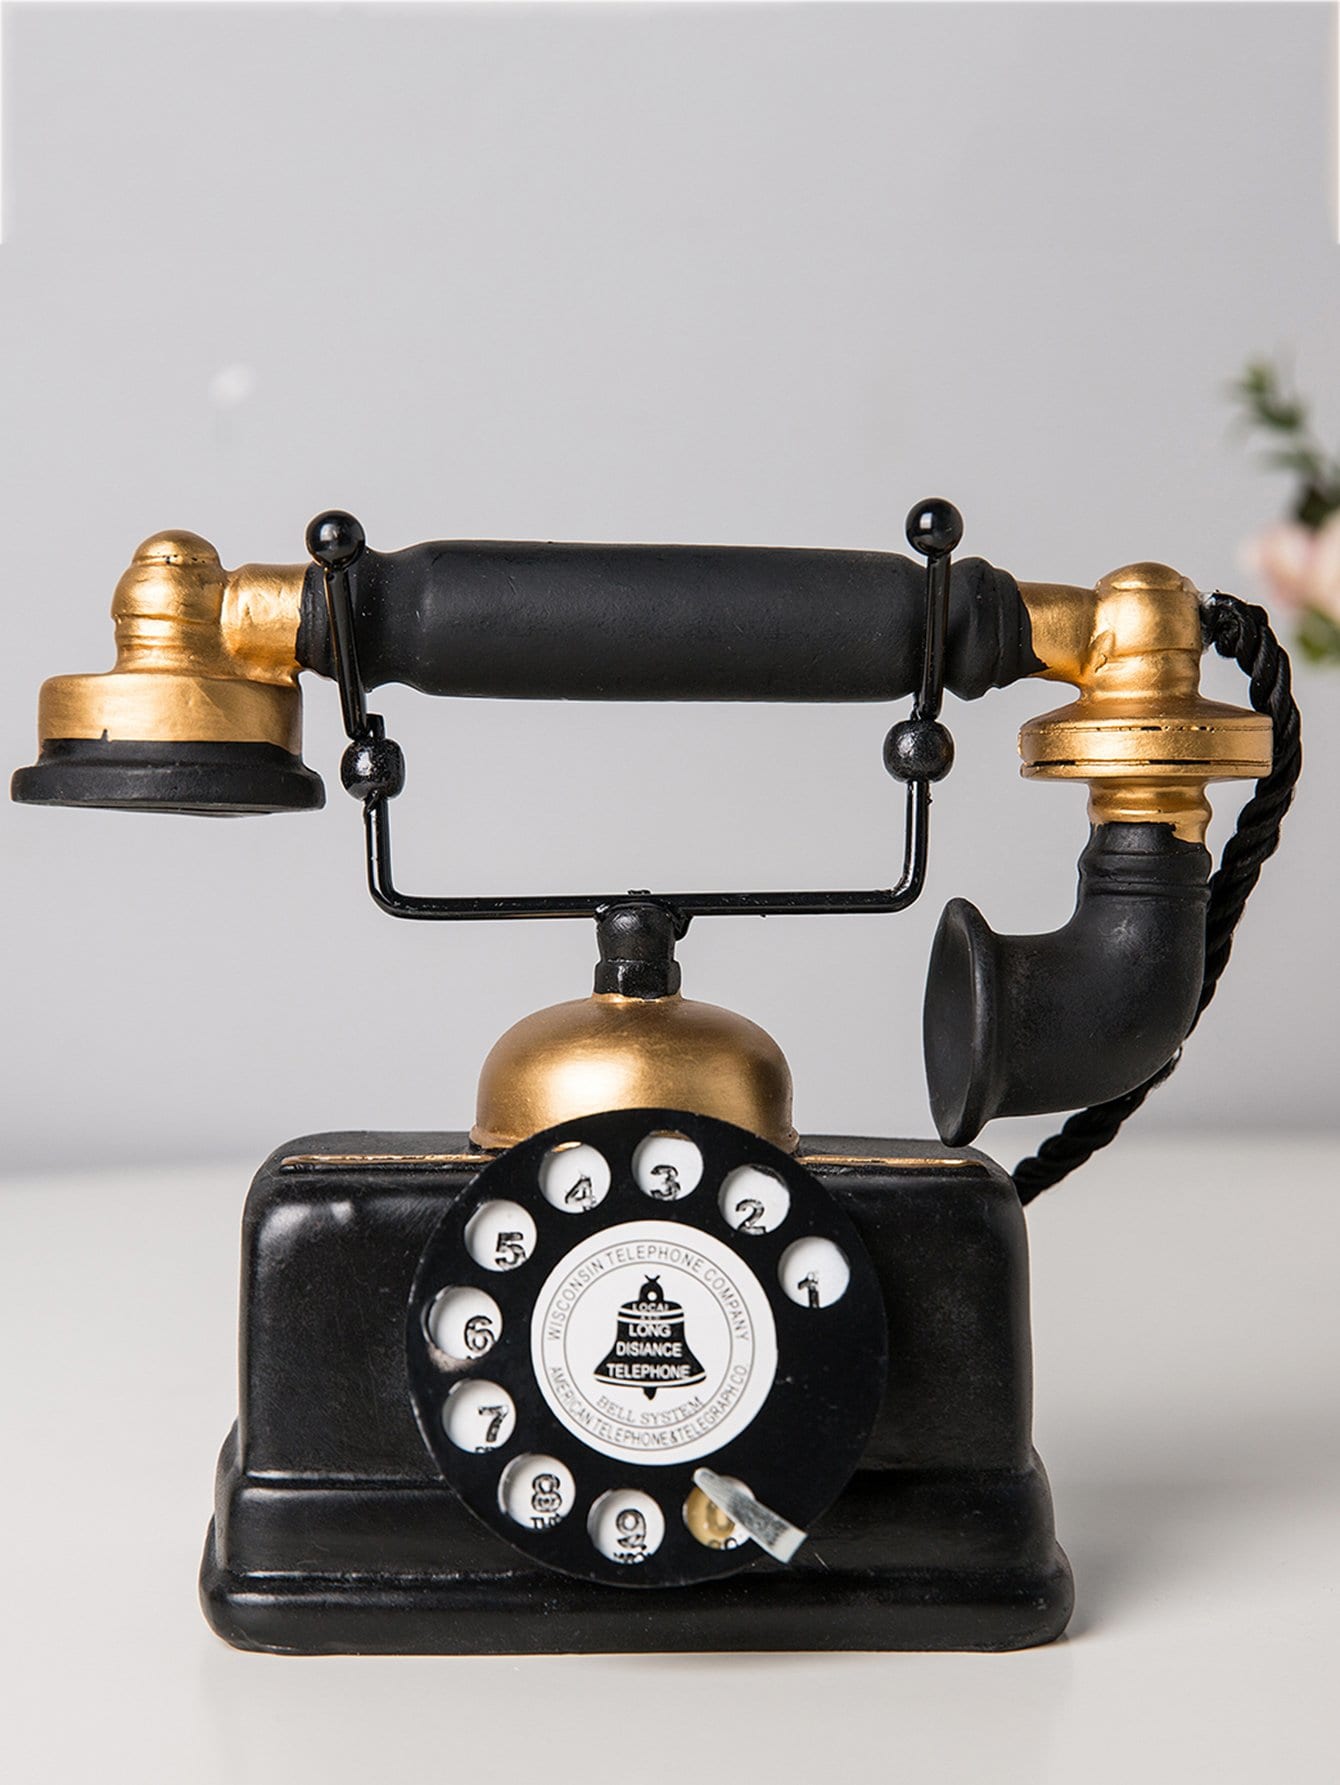 Old Telephone Decorative Object